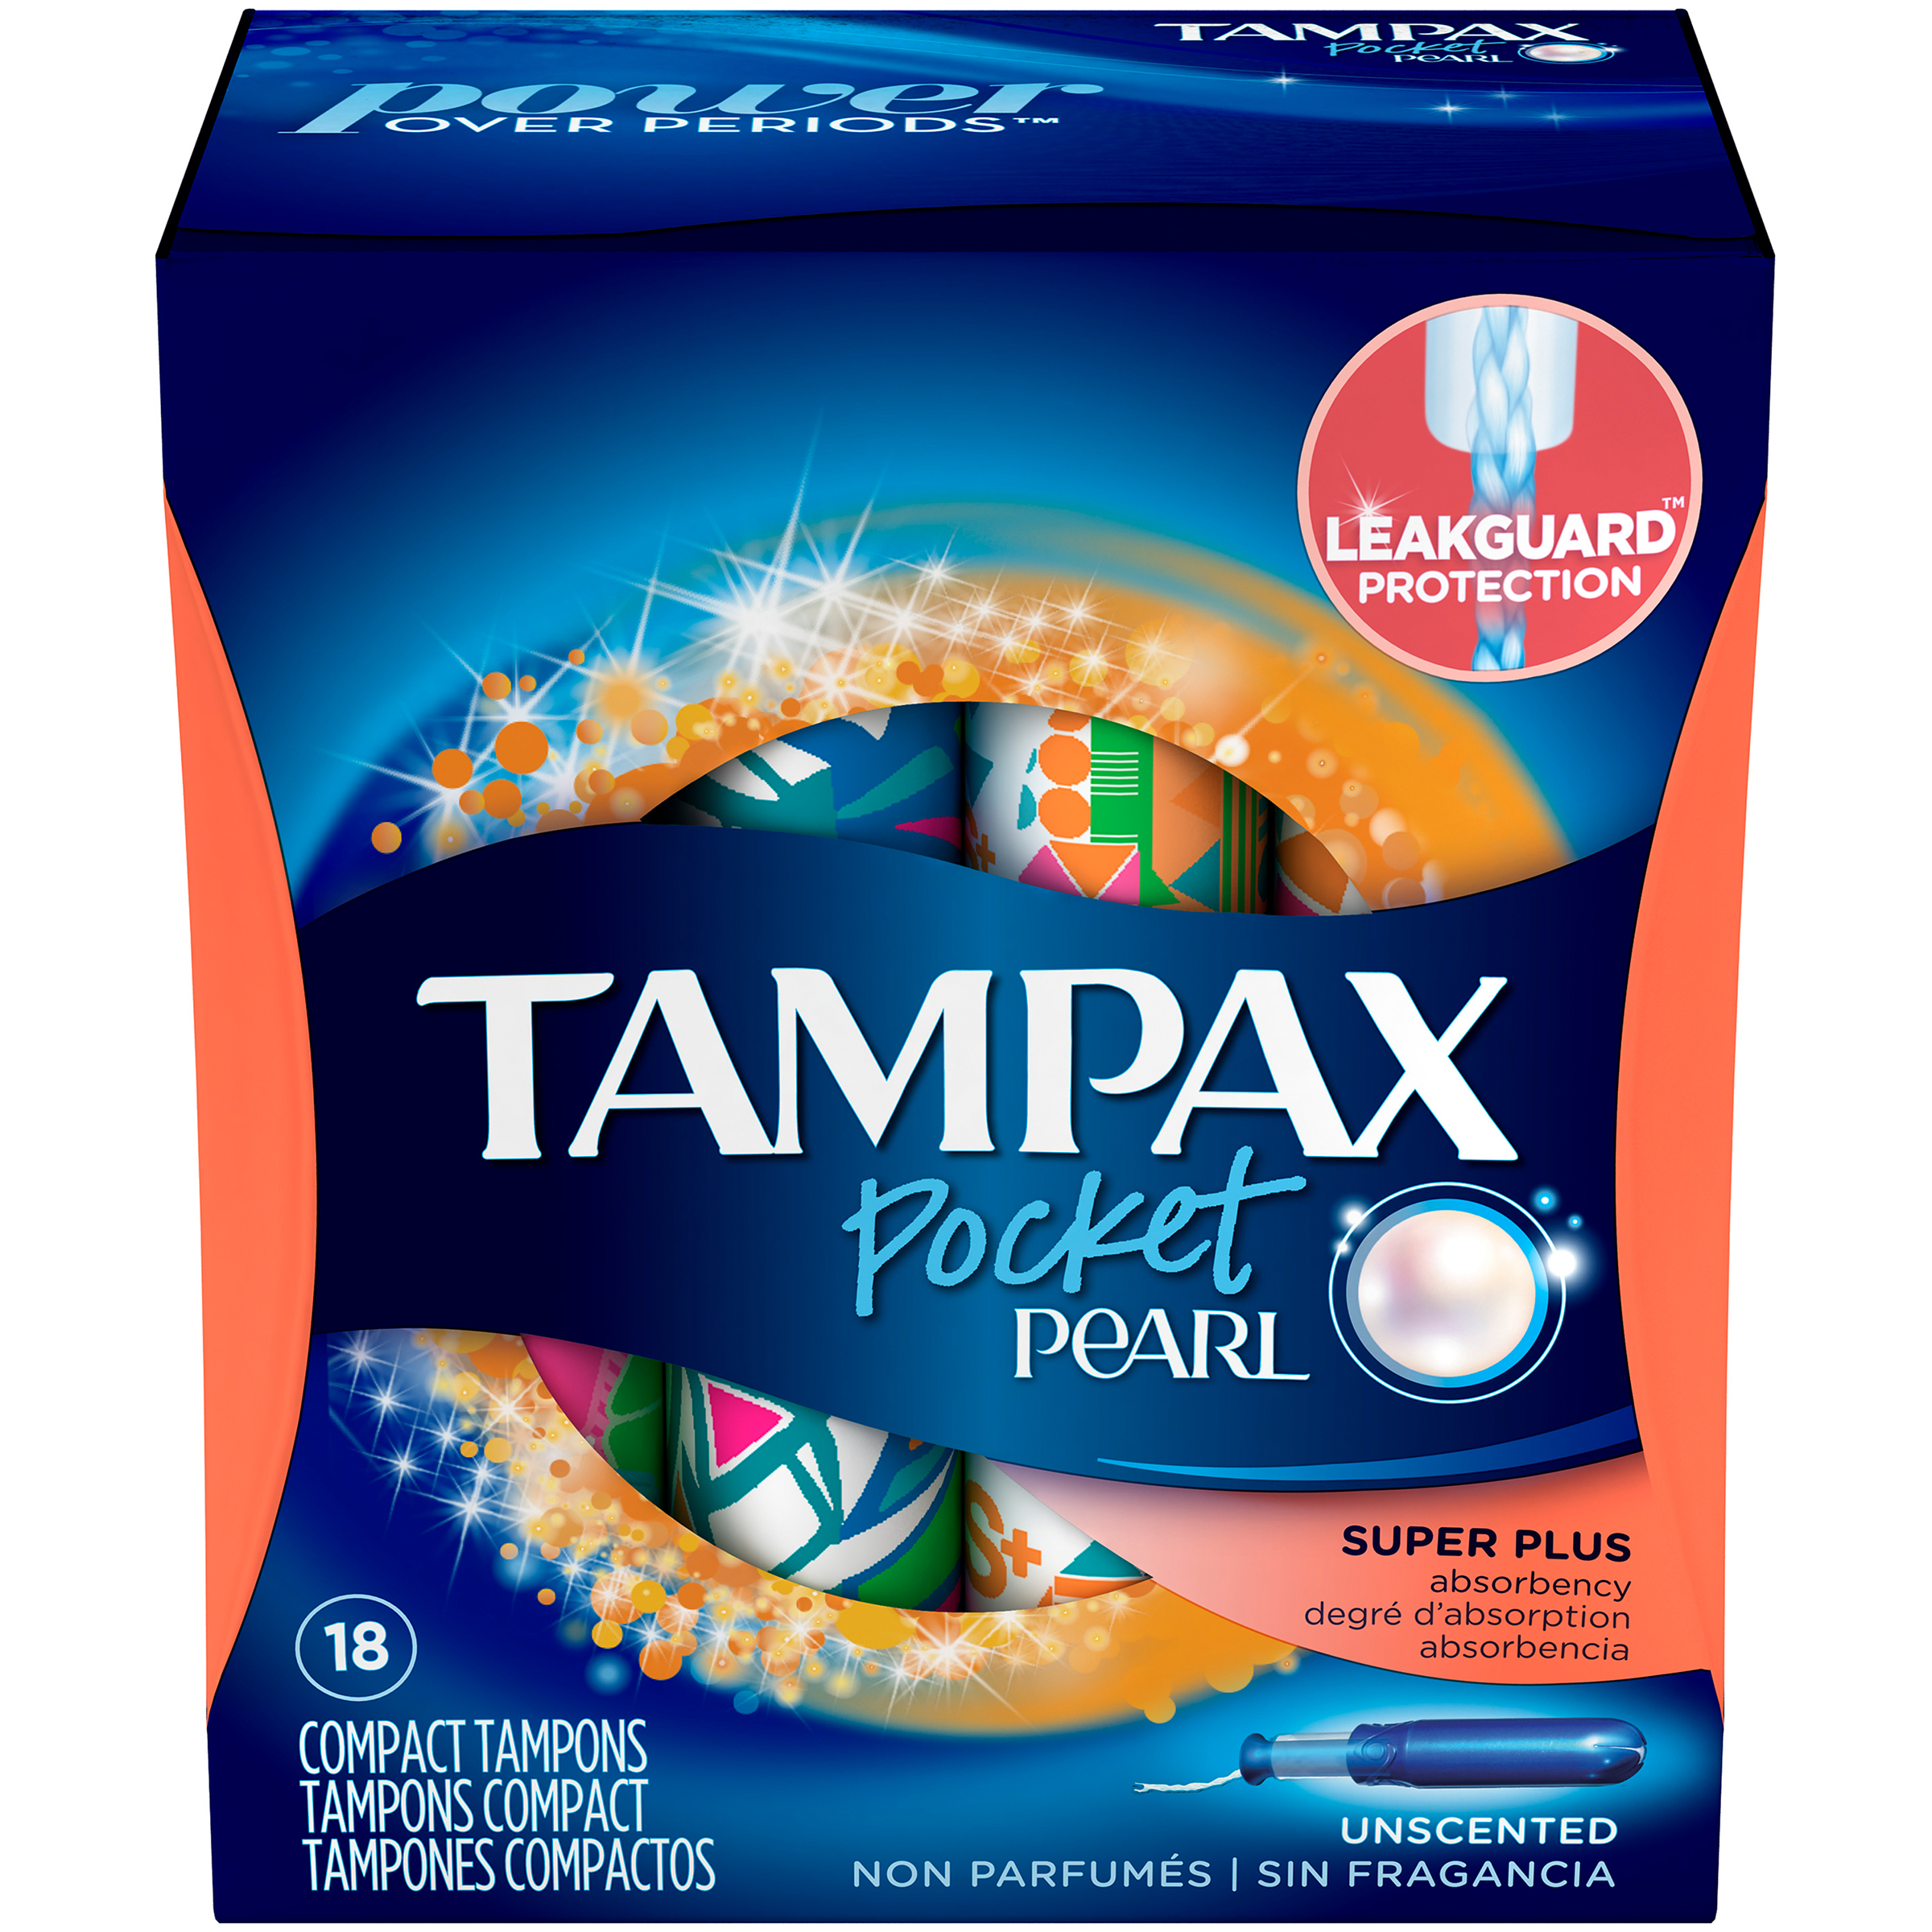 Tampax  Pocket Pearl Super Plus Plastic Tampons, Unscented, 18 Ct